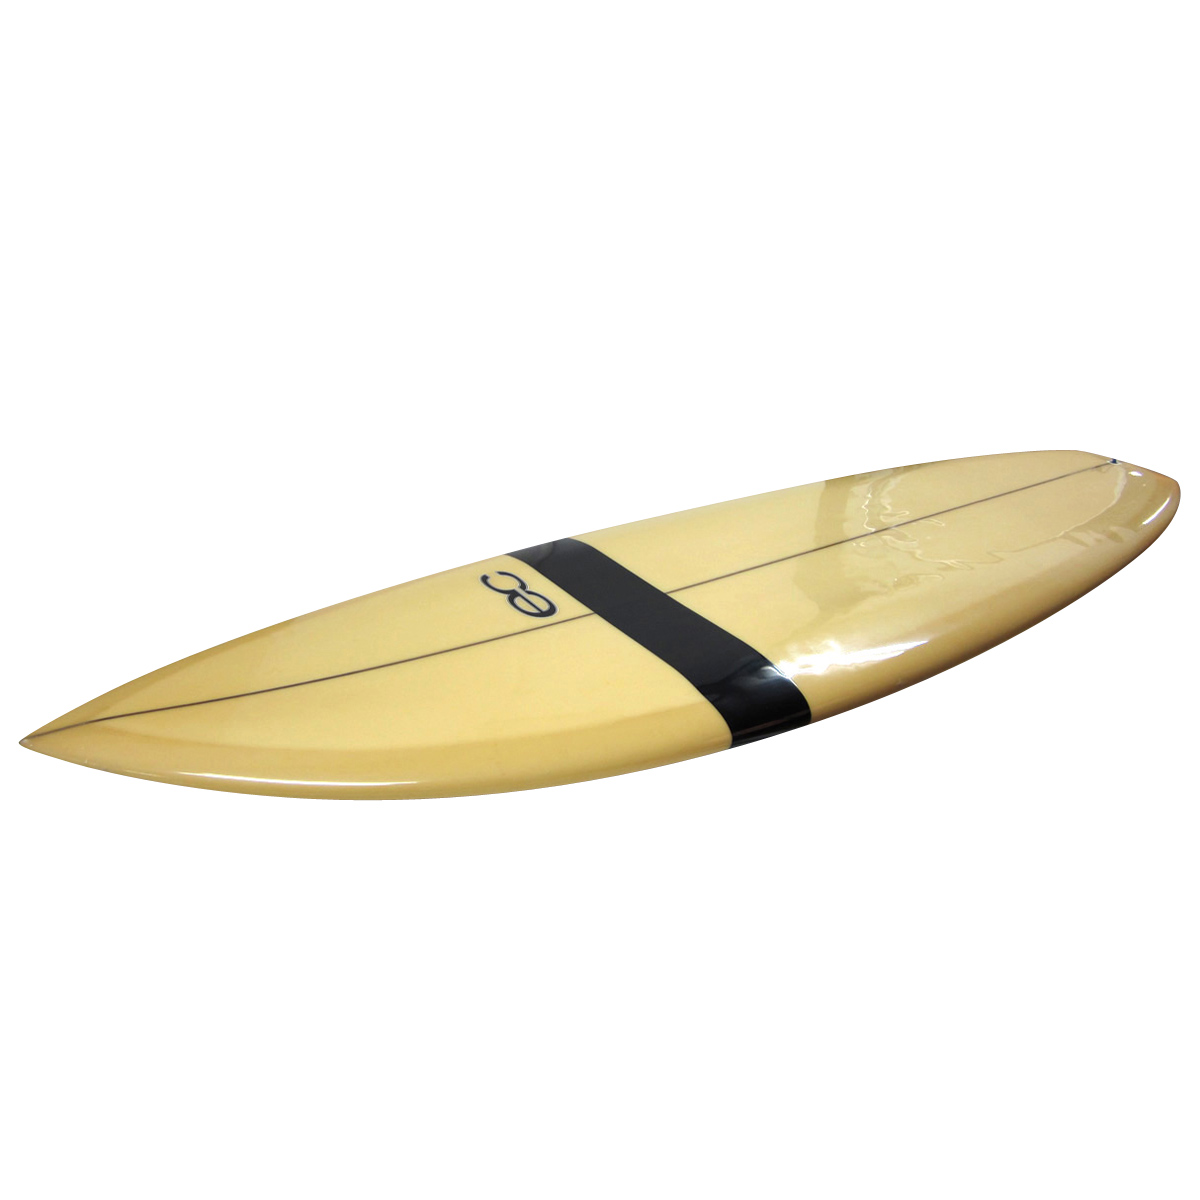 EC Surfboards / 5 Fin Bonzer 5`10 